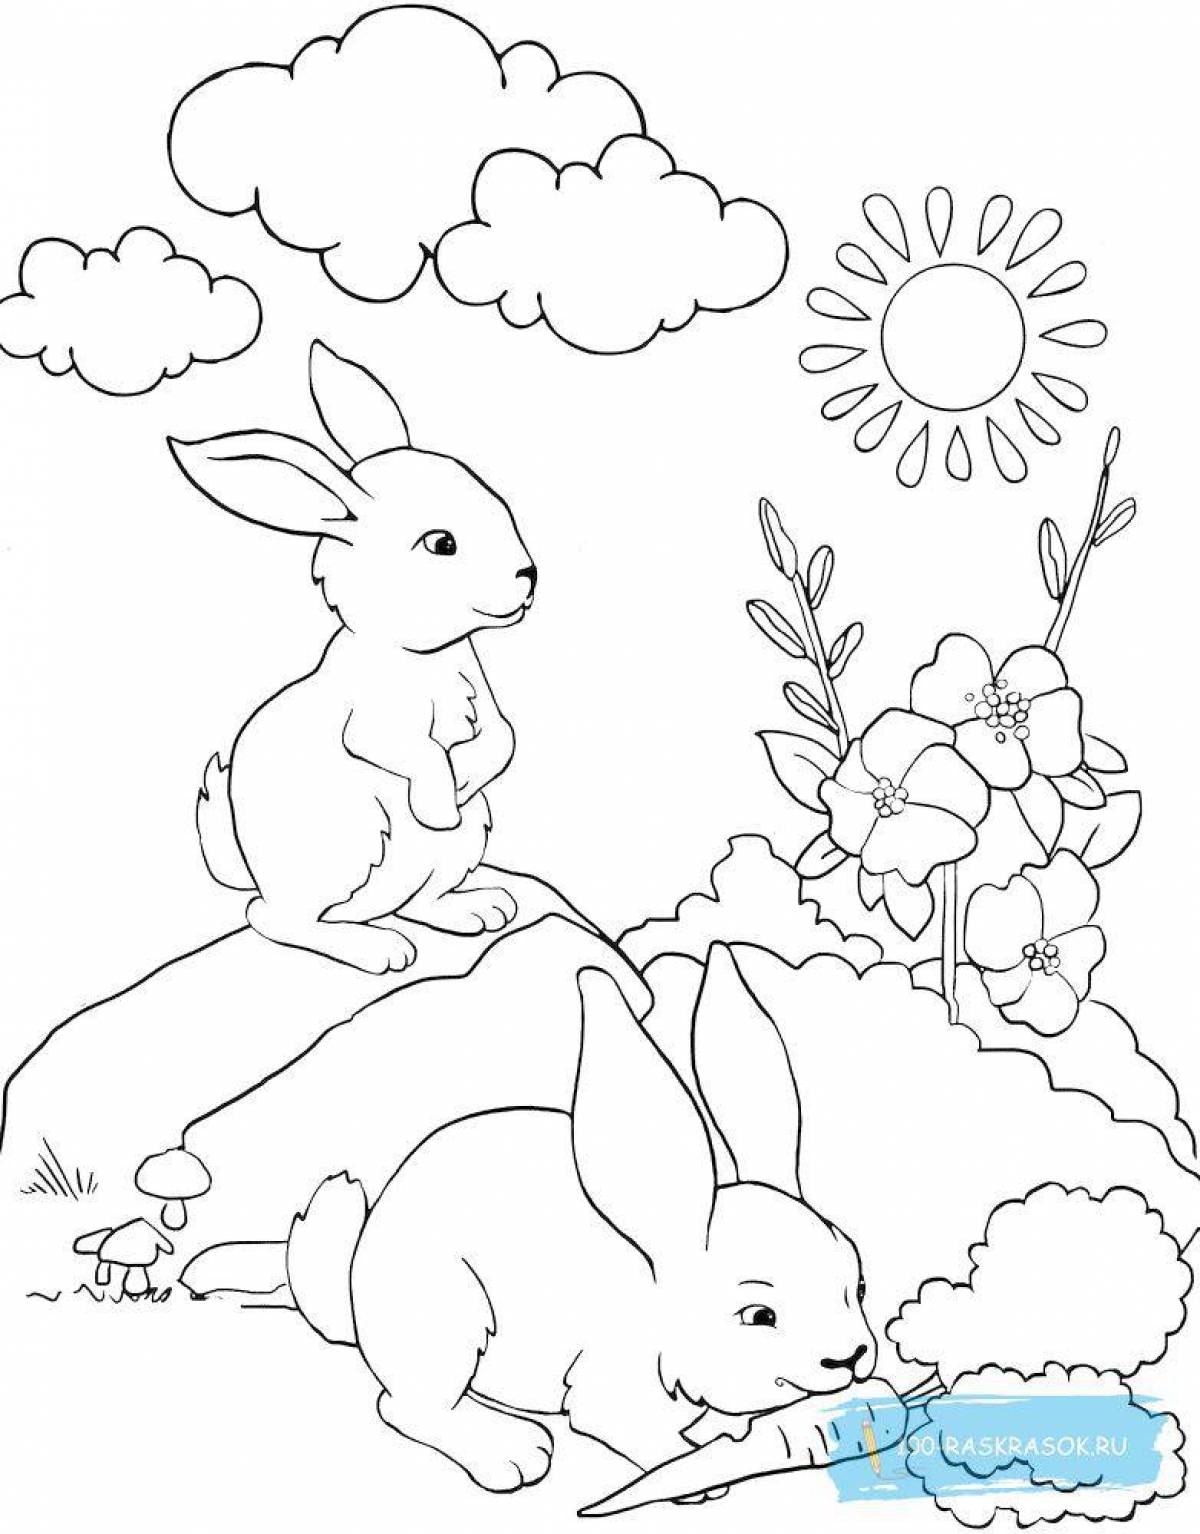 Fancy rabbit coloring for kids